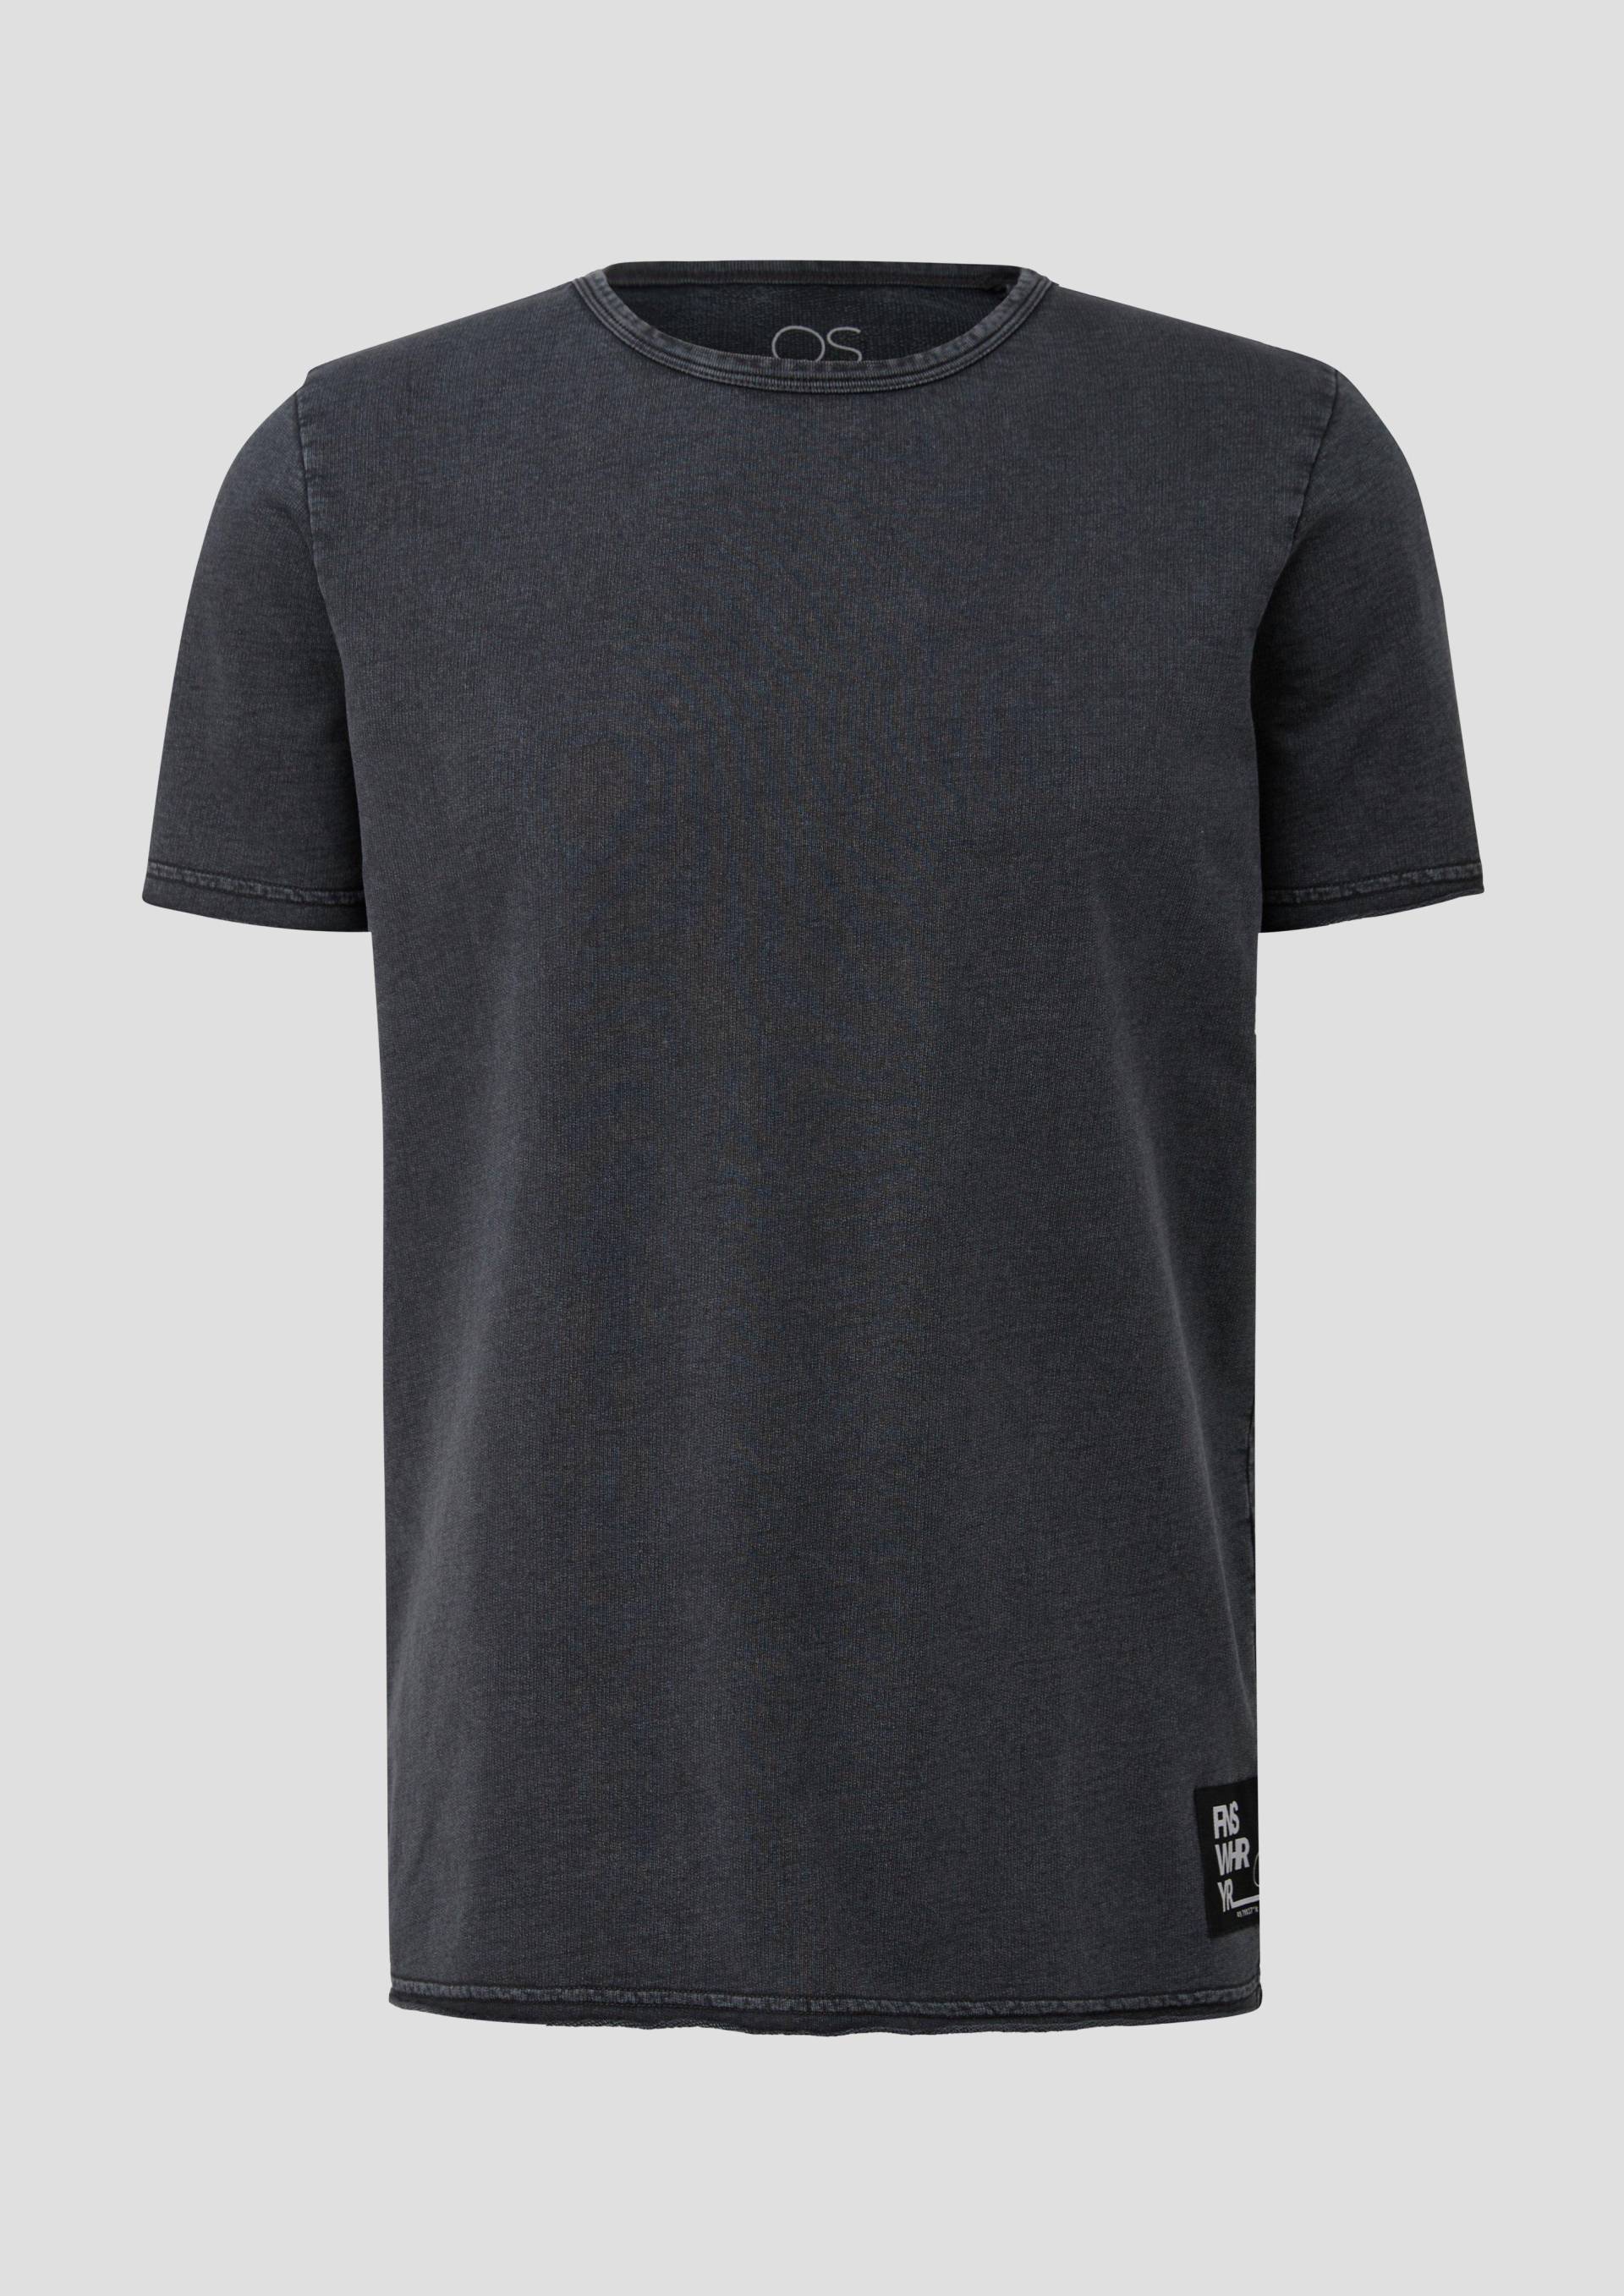 QS - T-Shirt im Garment Dye, Herren, grau von QS